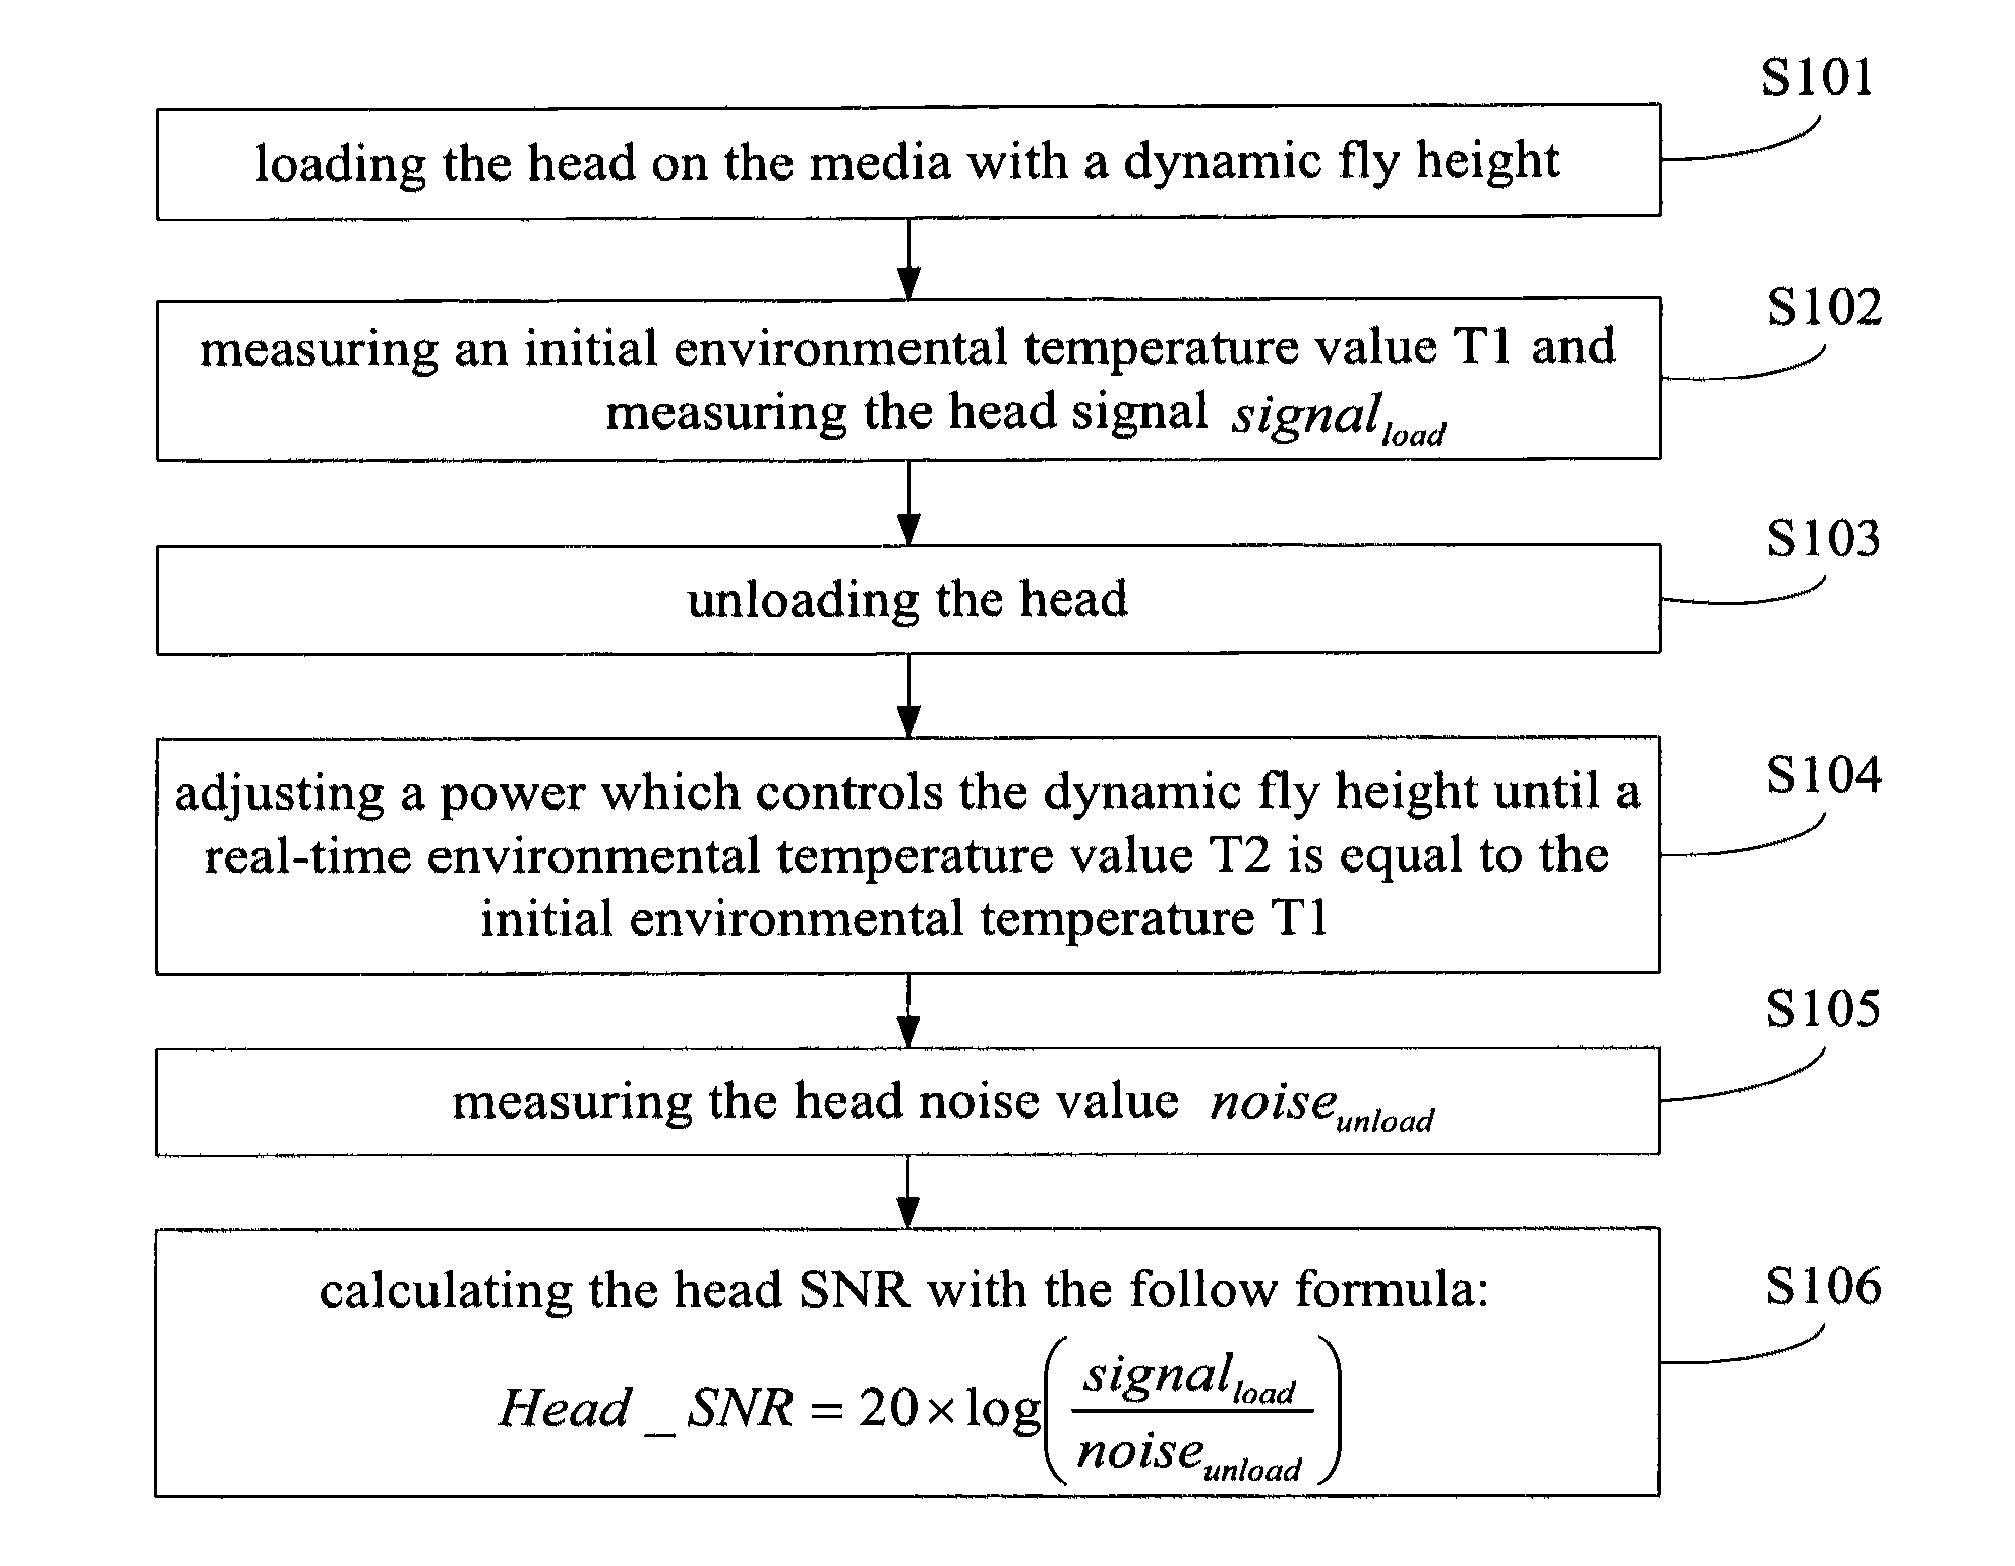 Close loop method for measuring head SNR and media SNR